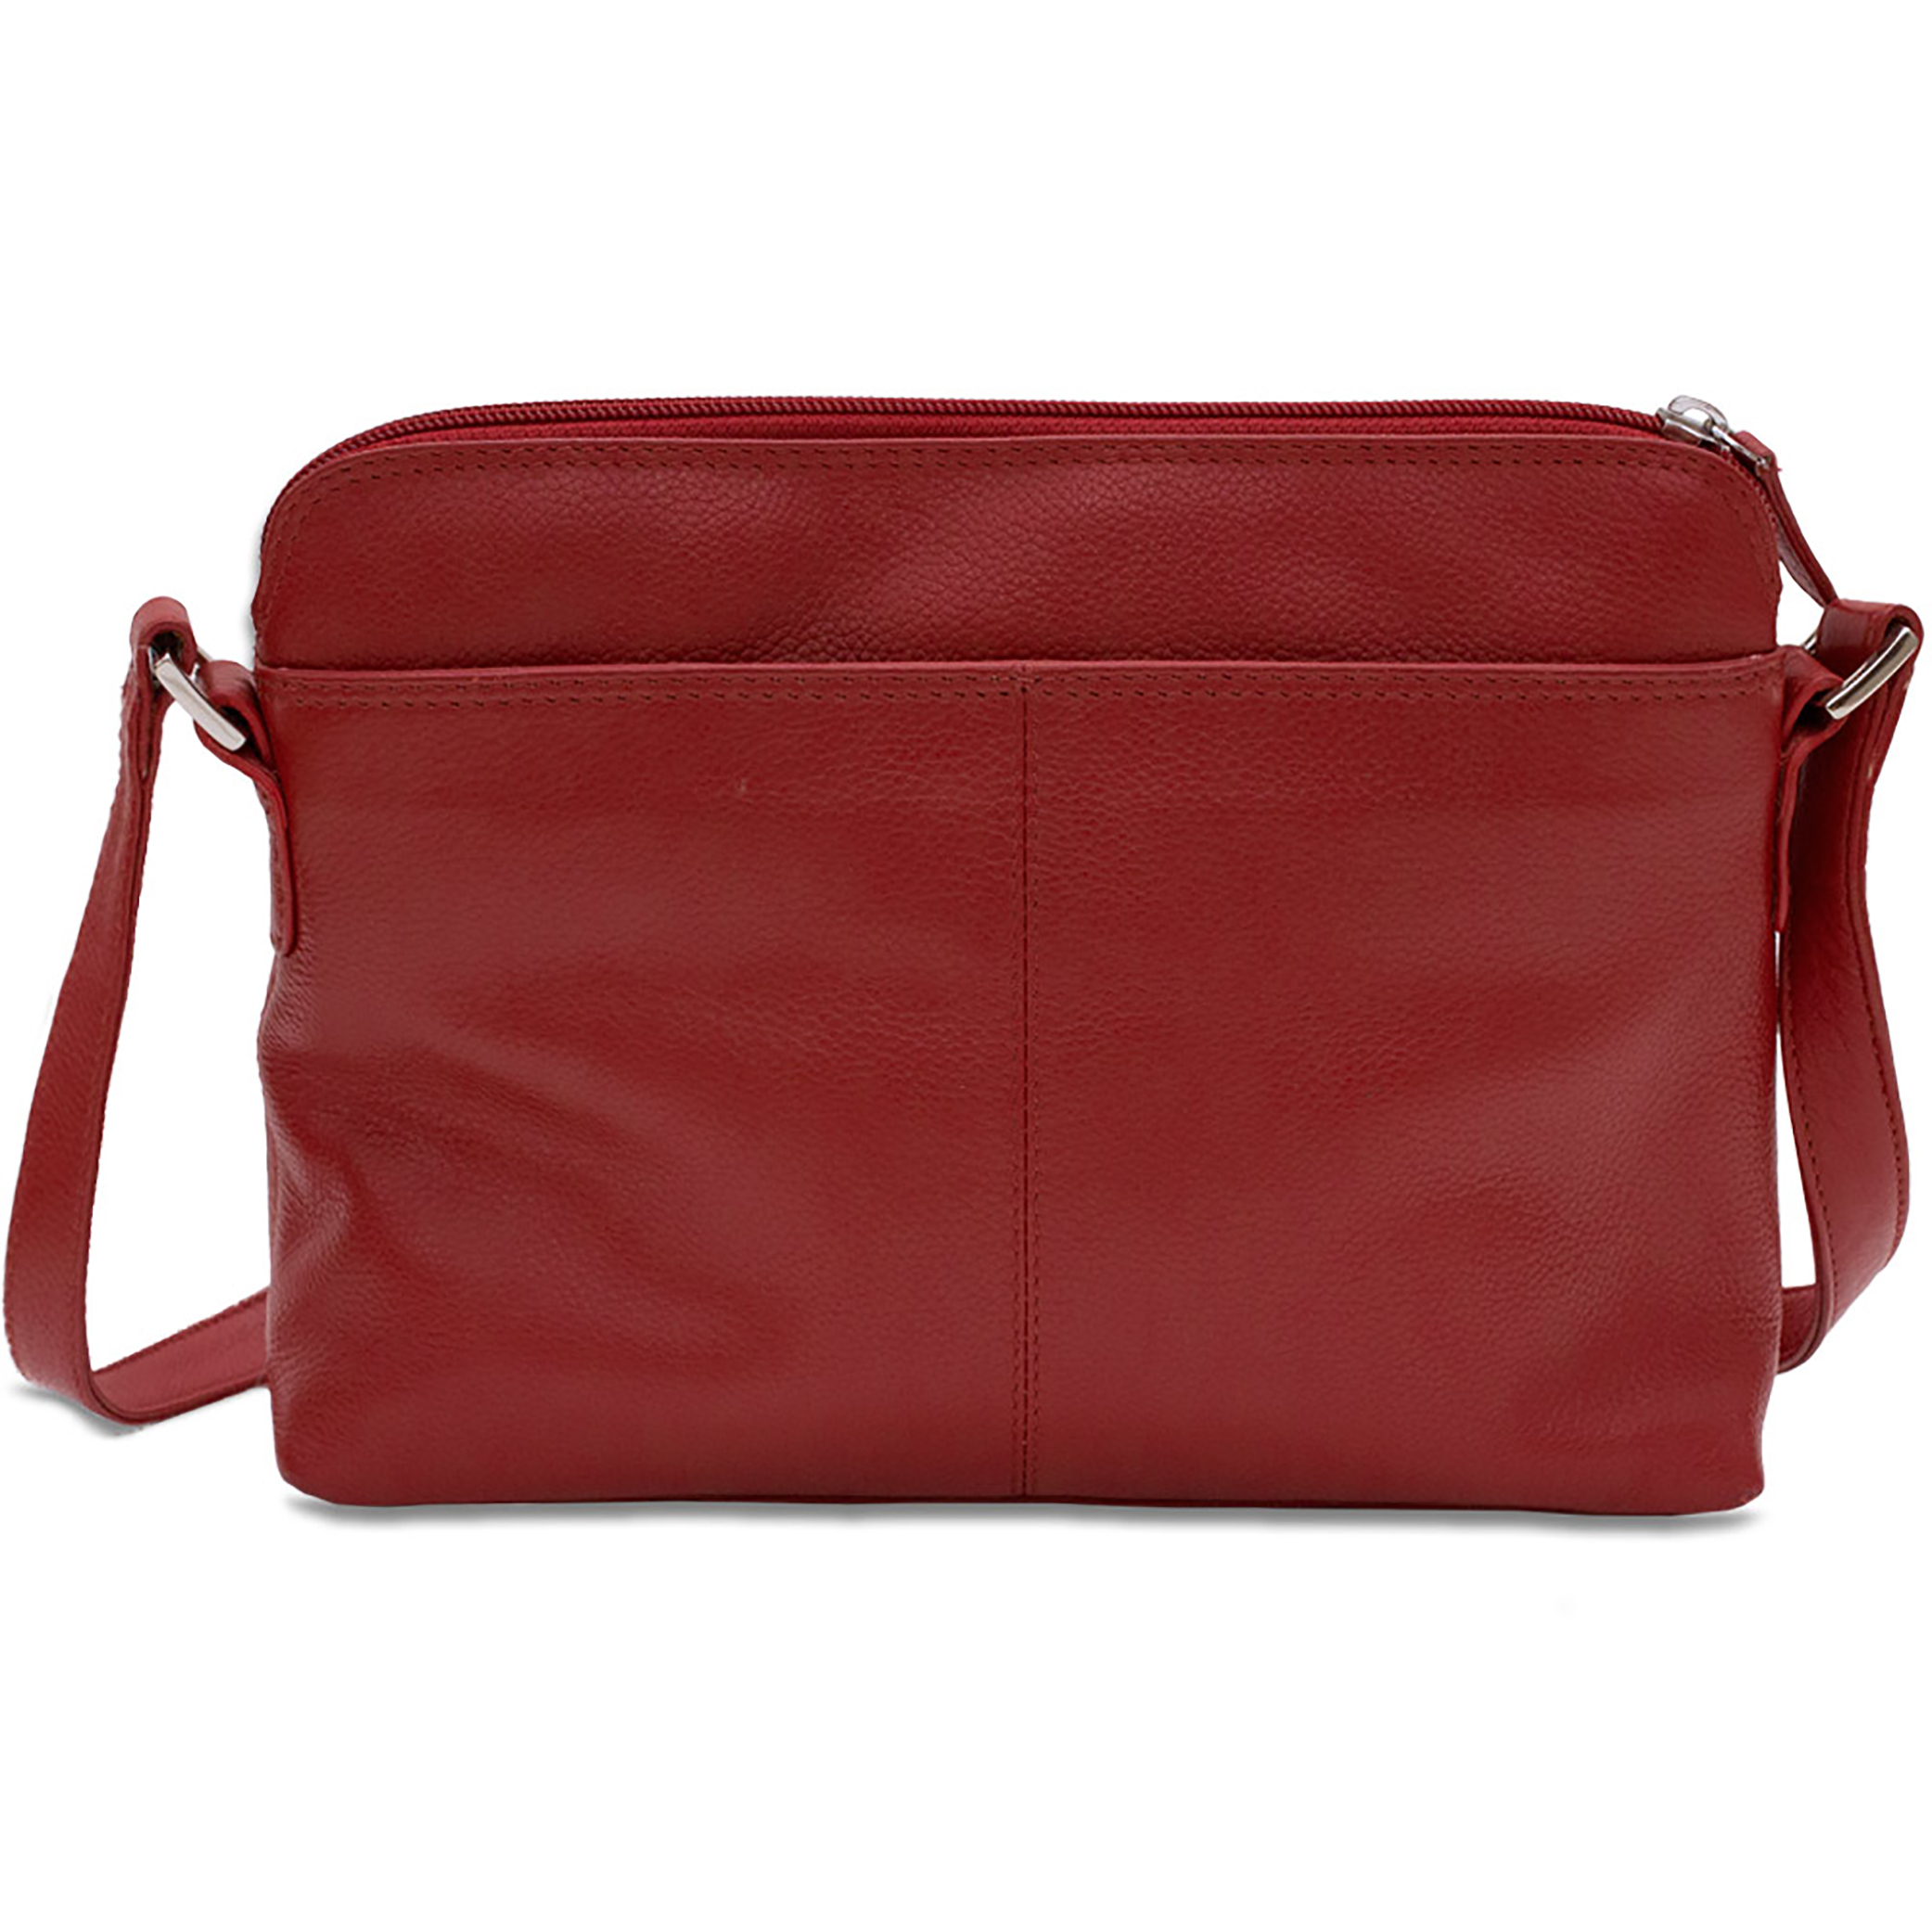 ILI 6333 Leather Shoulder Handbag